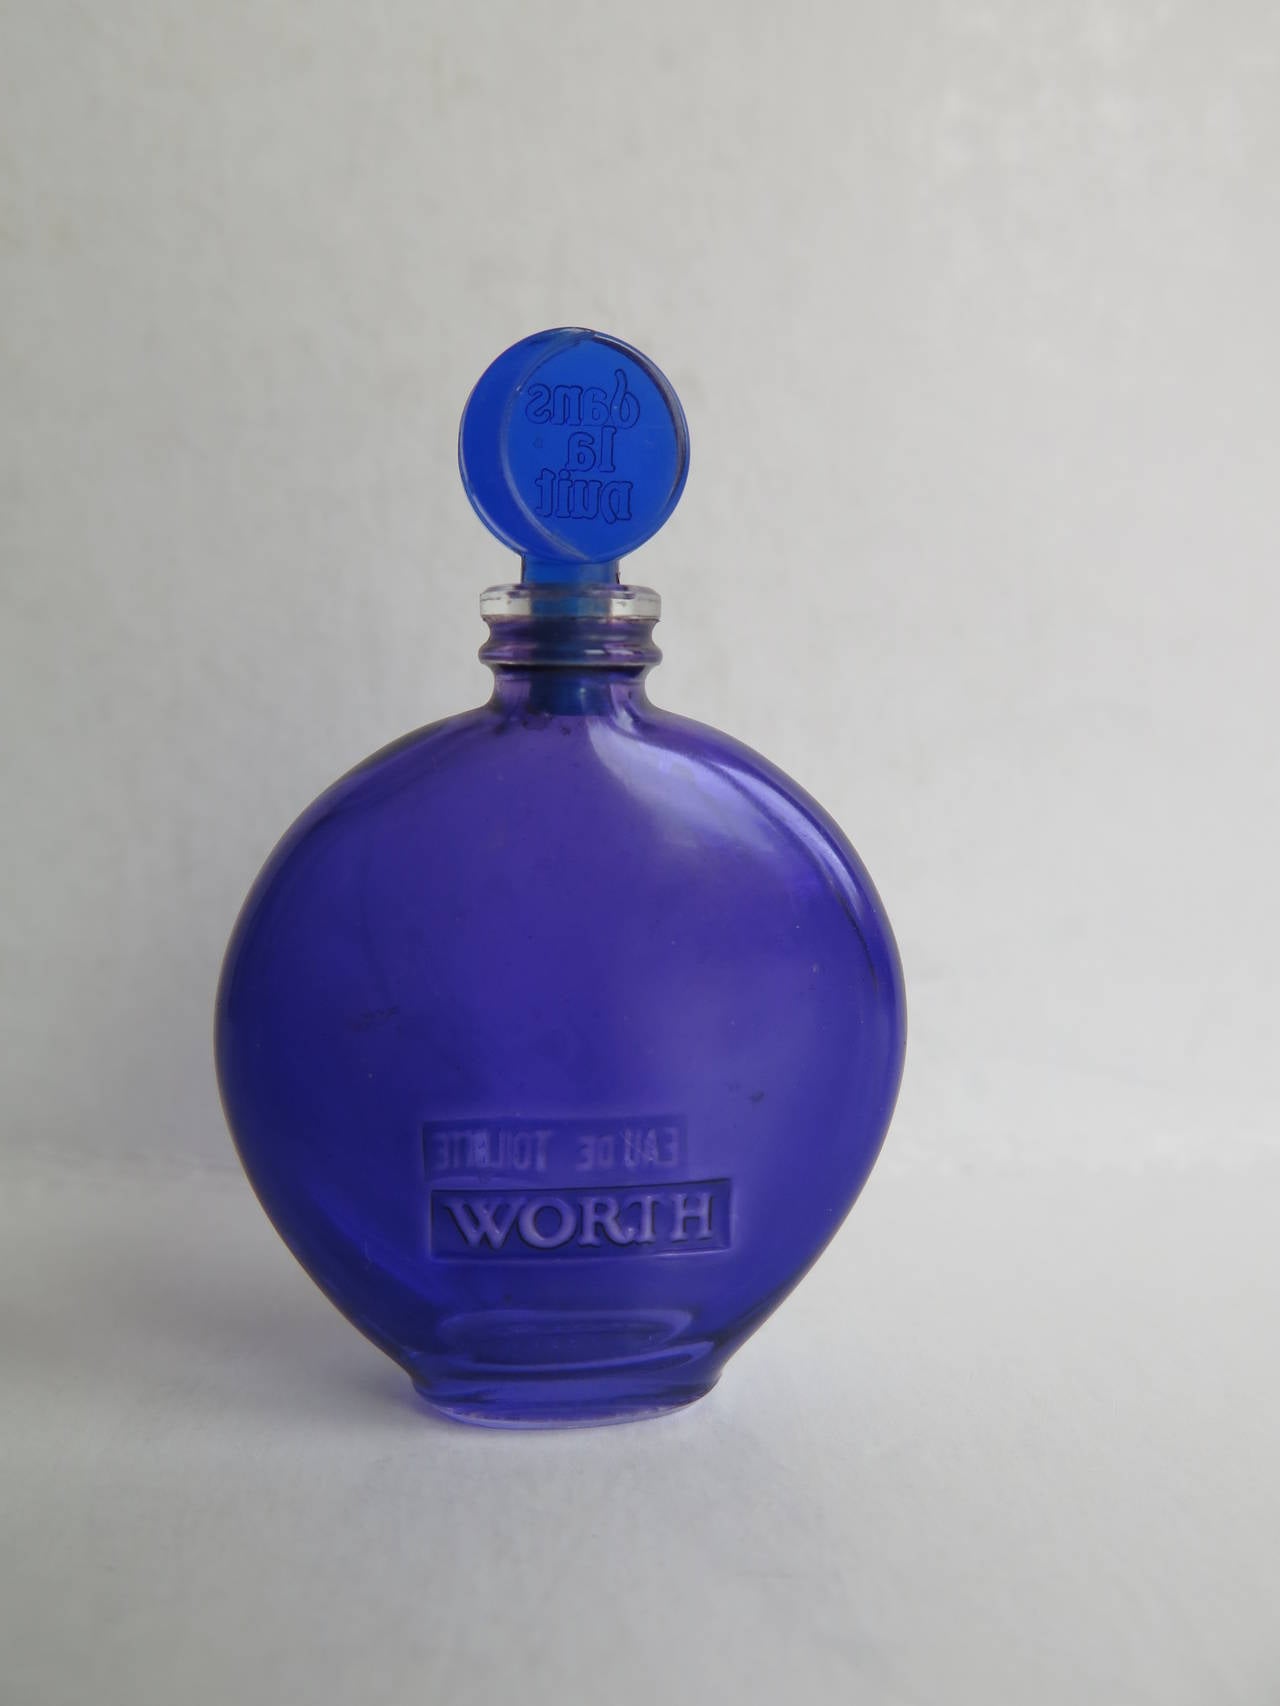 Worth perfume bottle